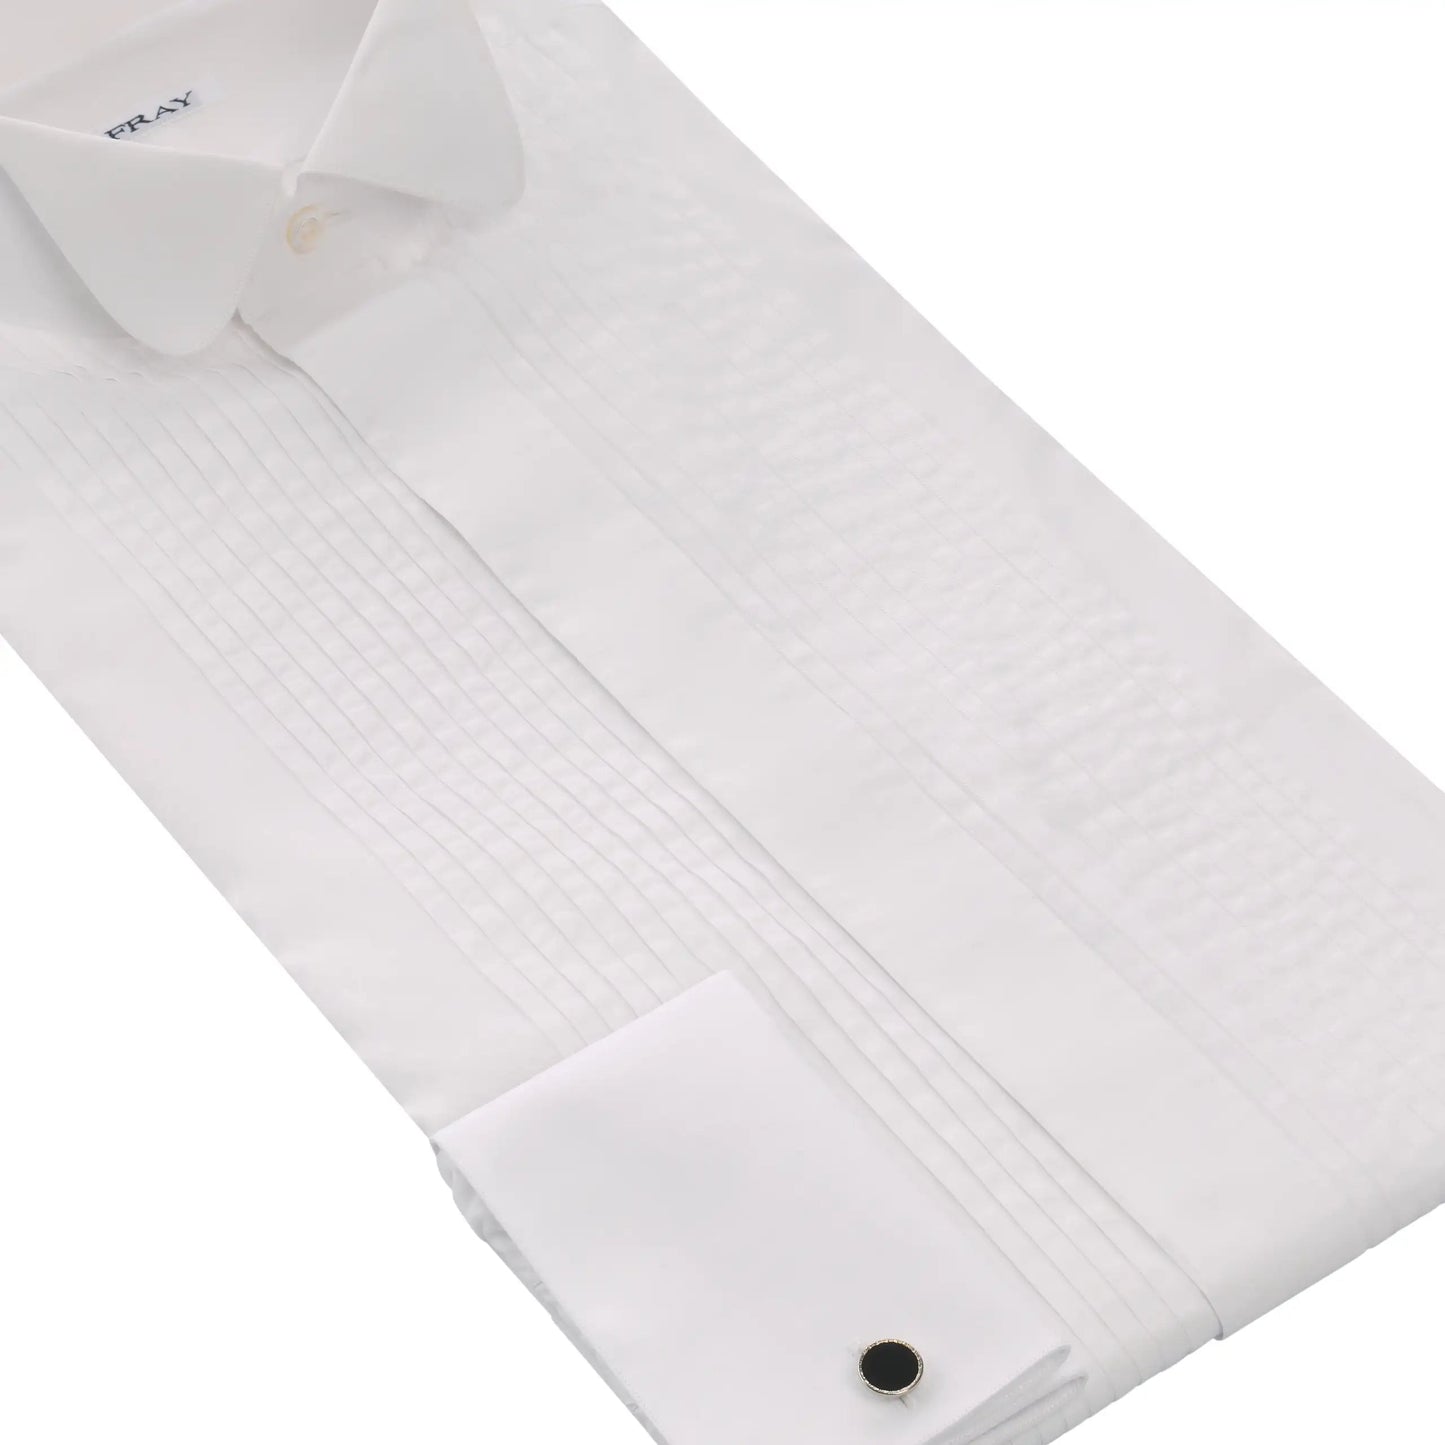 Fray Cotton White Tailcoat Shirt - SARTALE